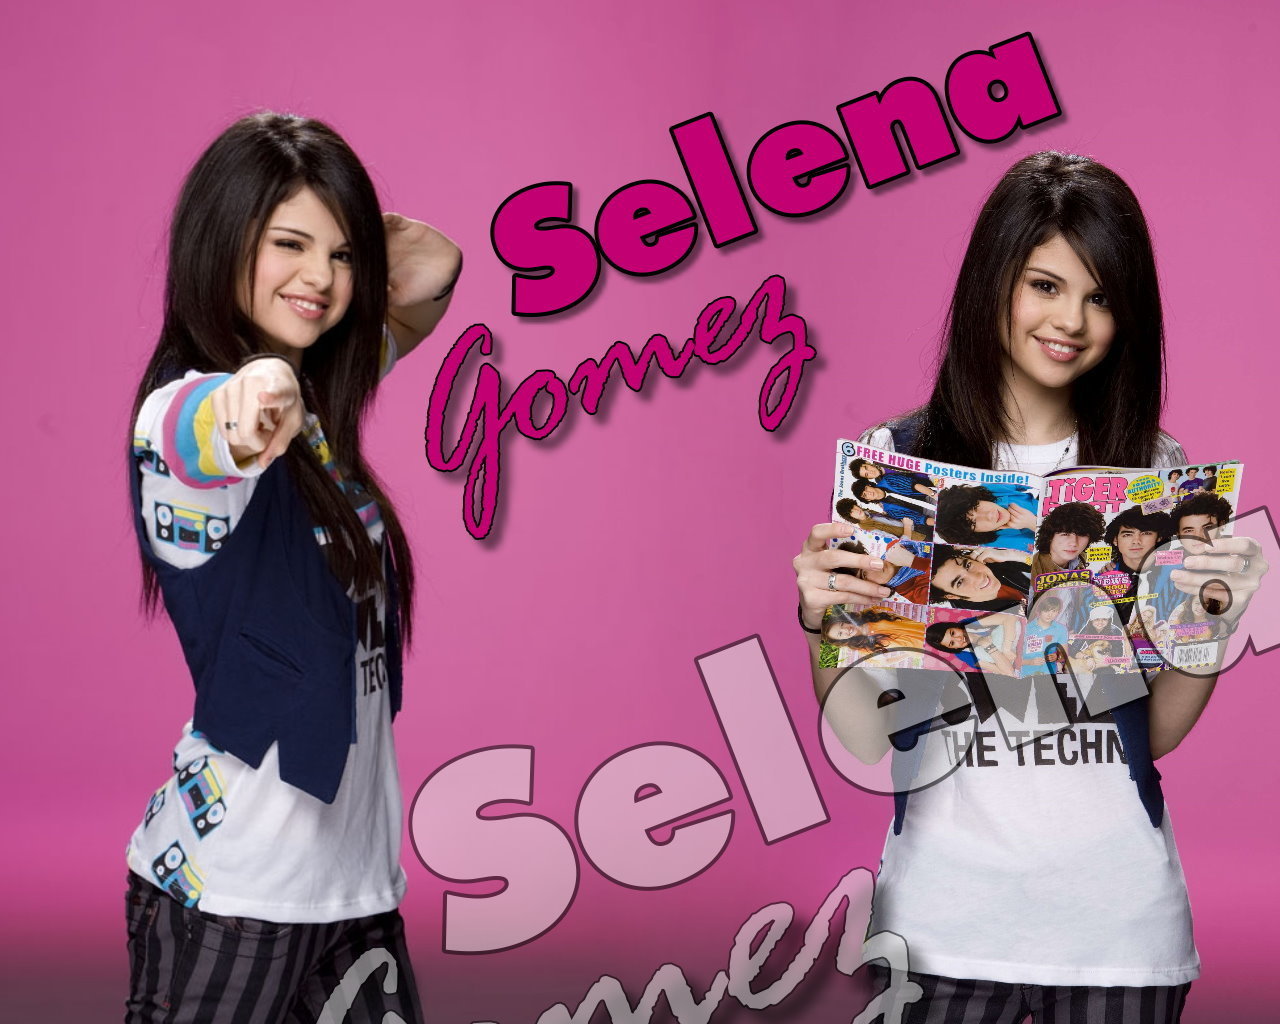 http://3.bp.blogspot.com/-OVDSty74BBY/Tmhcz5EabYI/AAAAAAAAAtw/Q27h7wYa1lc/s1600/Selena-Gomez-Wallpaper-selena-gomez-6849164-1280-1024.jpg